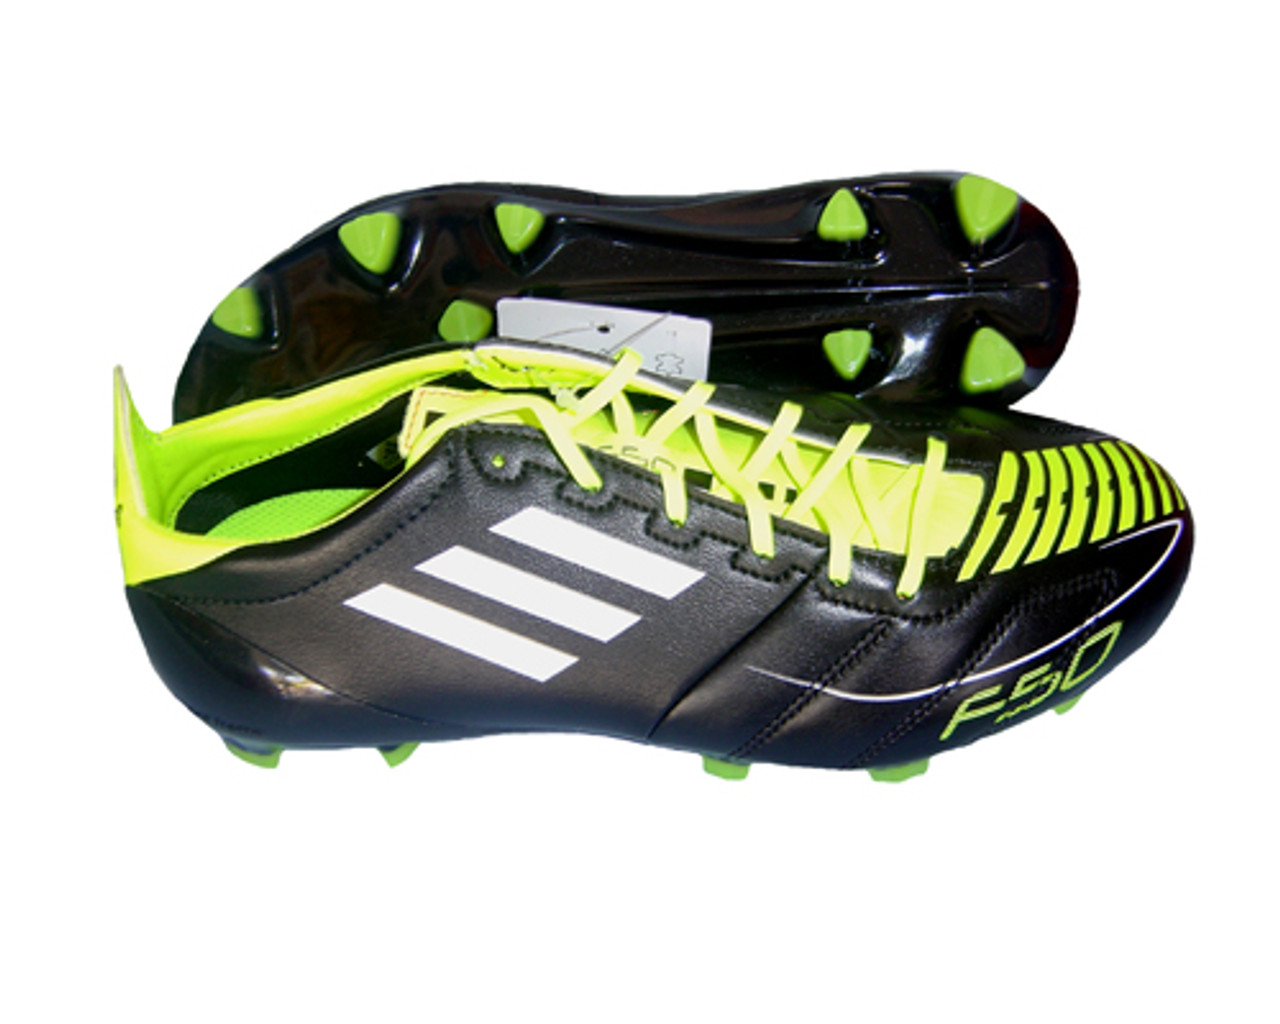 adidas f50 soccer cleats